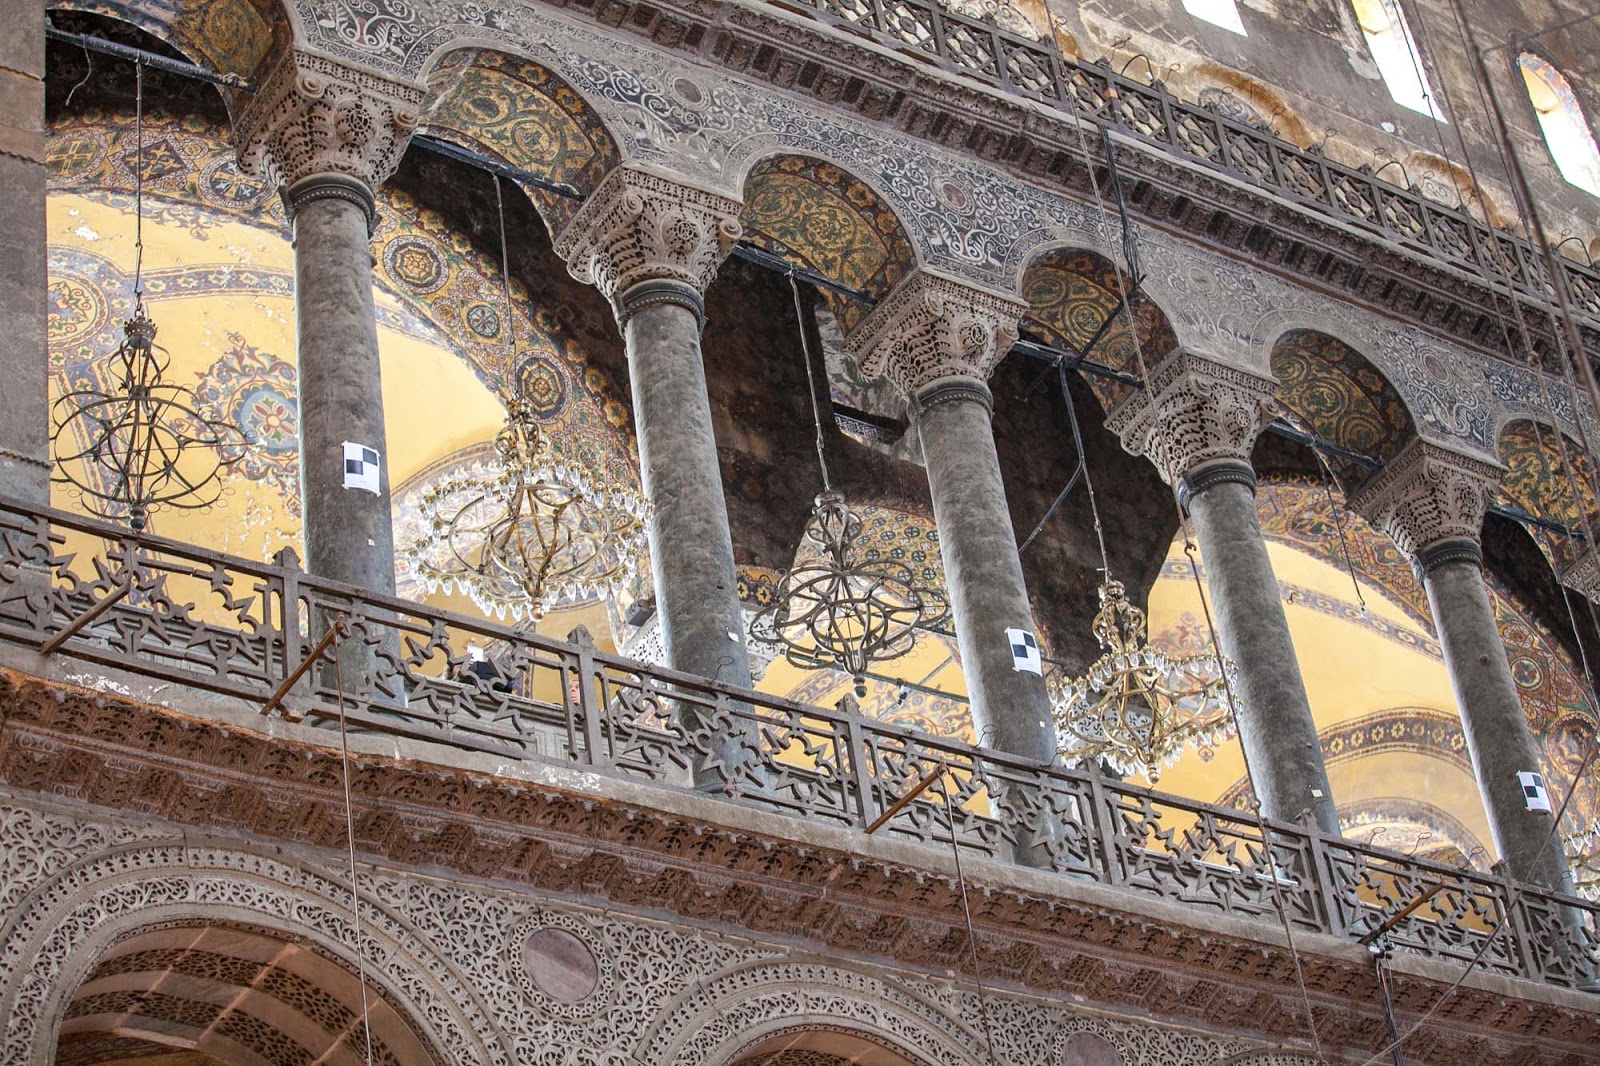 Columns inside Hagia Sophia